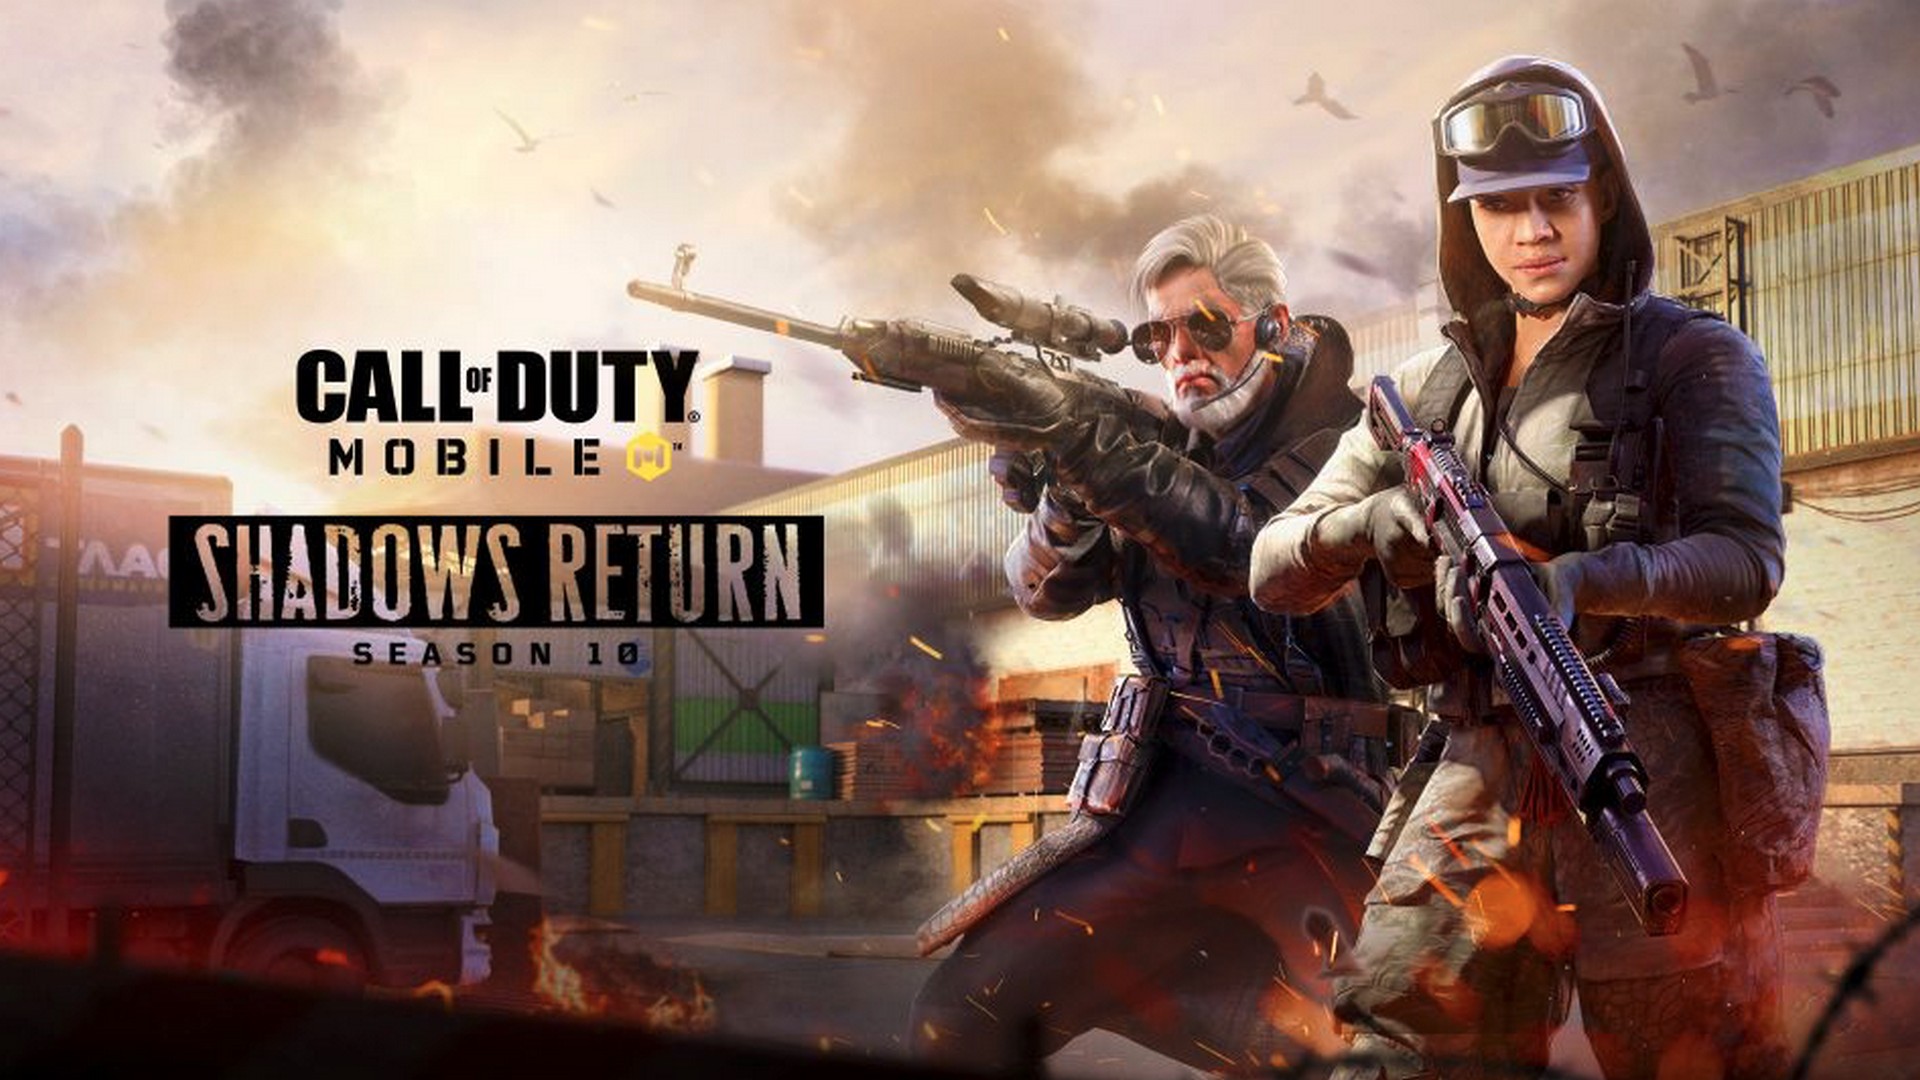 Call of Duty: Mobile Season 10: Shadows Return Launches Thursday 18 November AEDT/NZDT